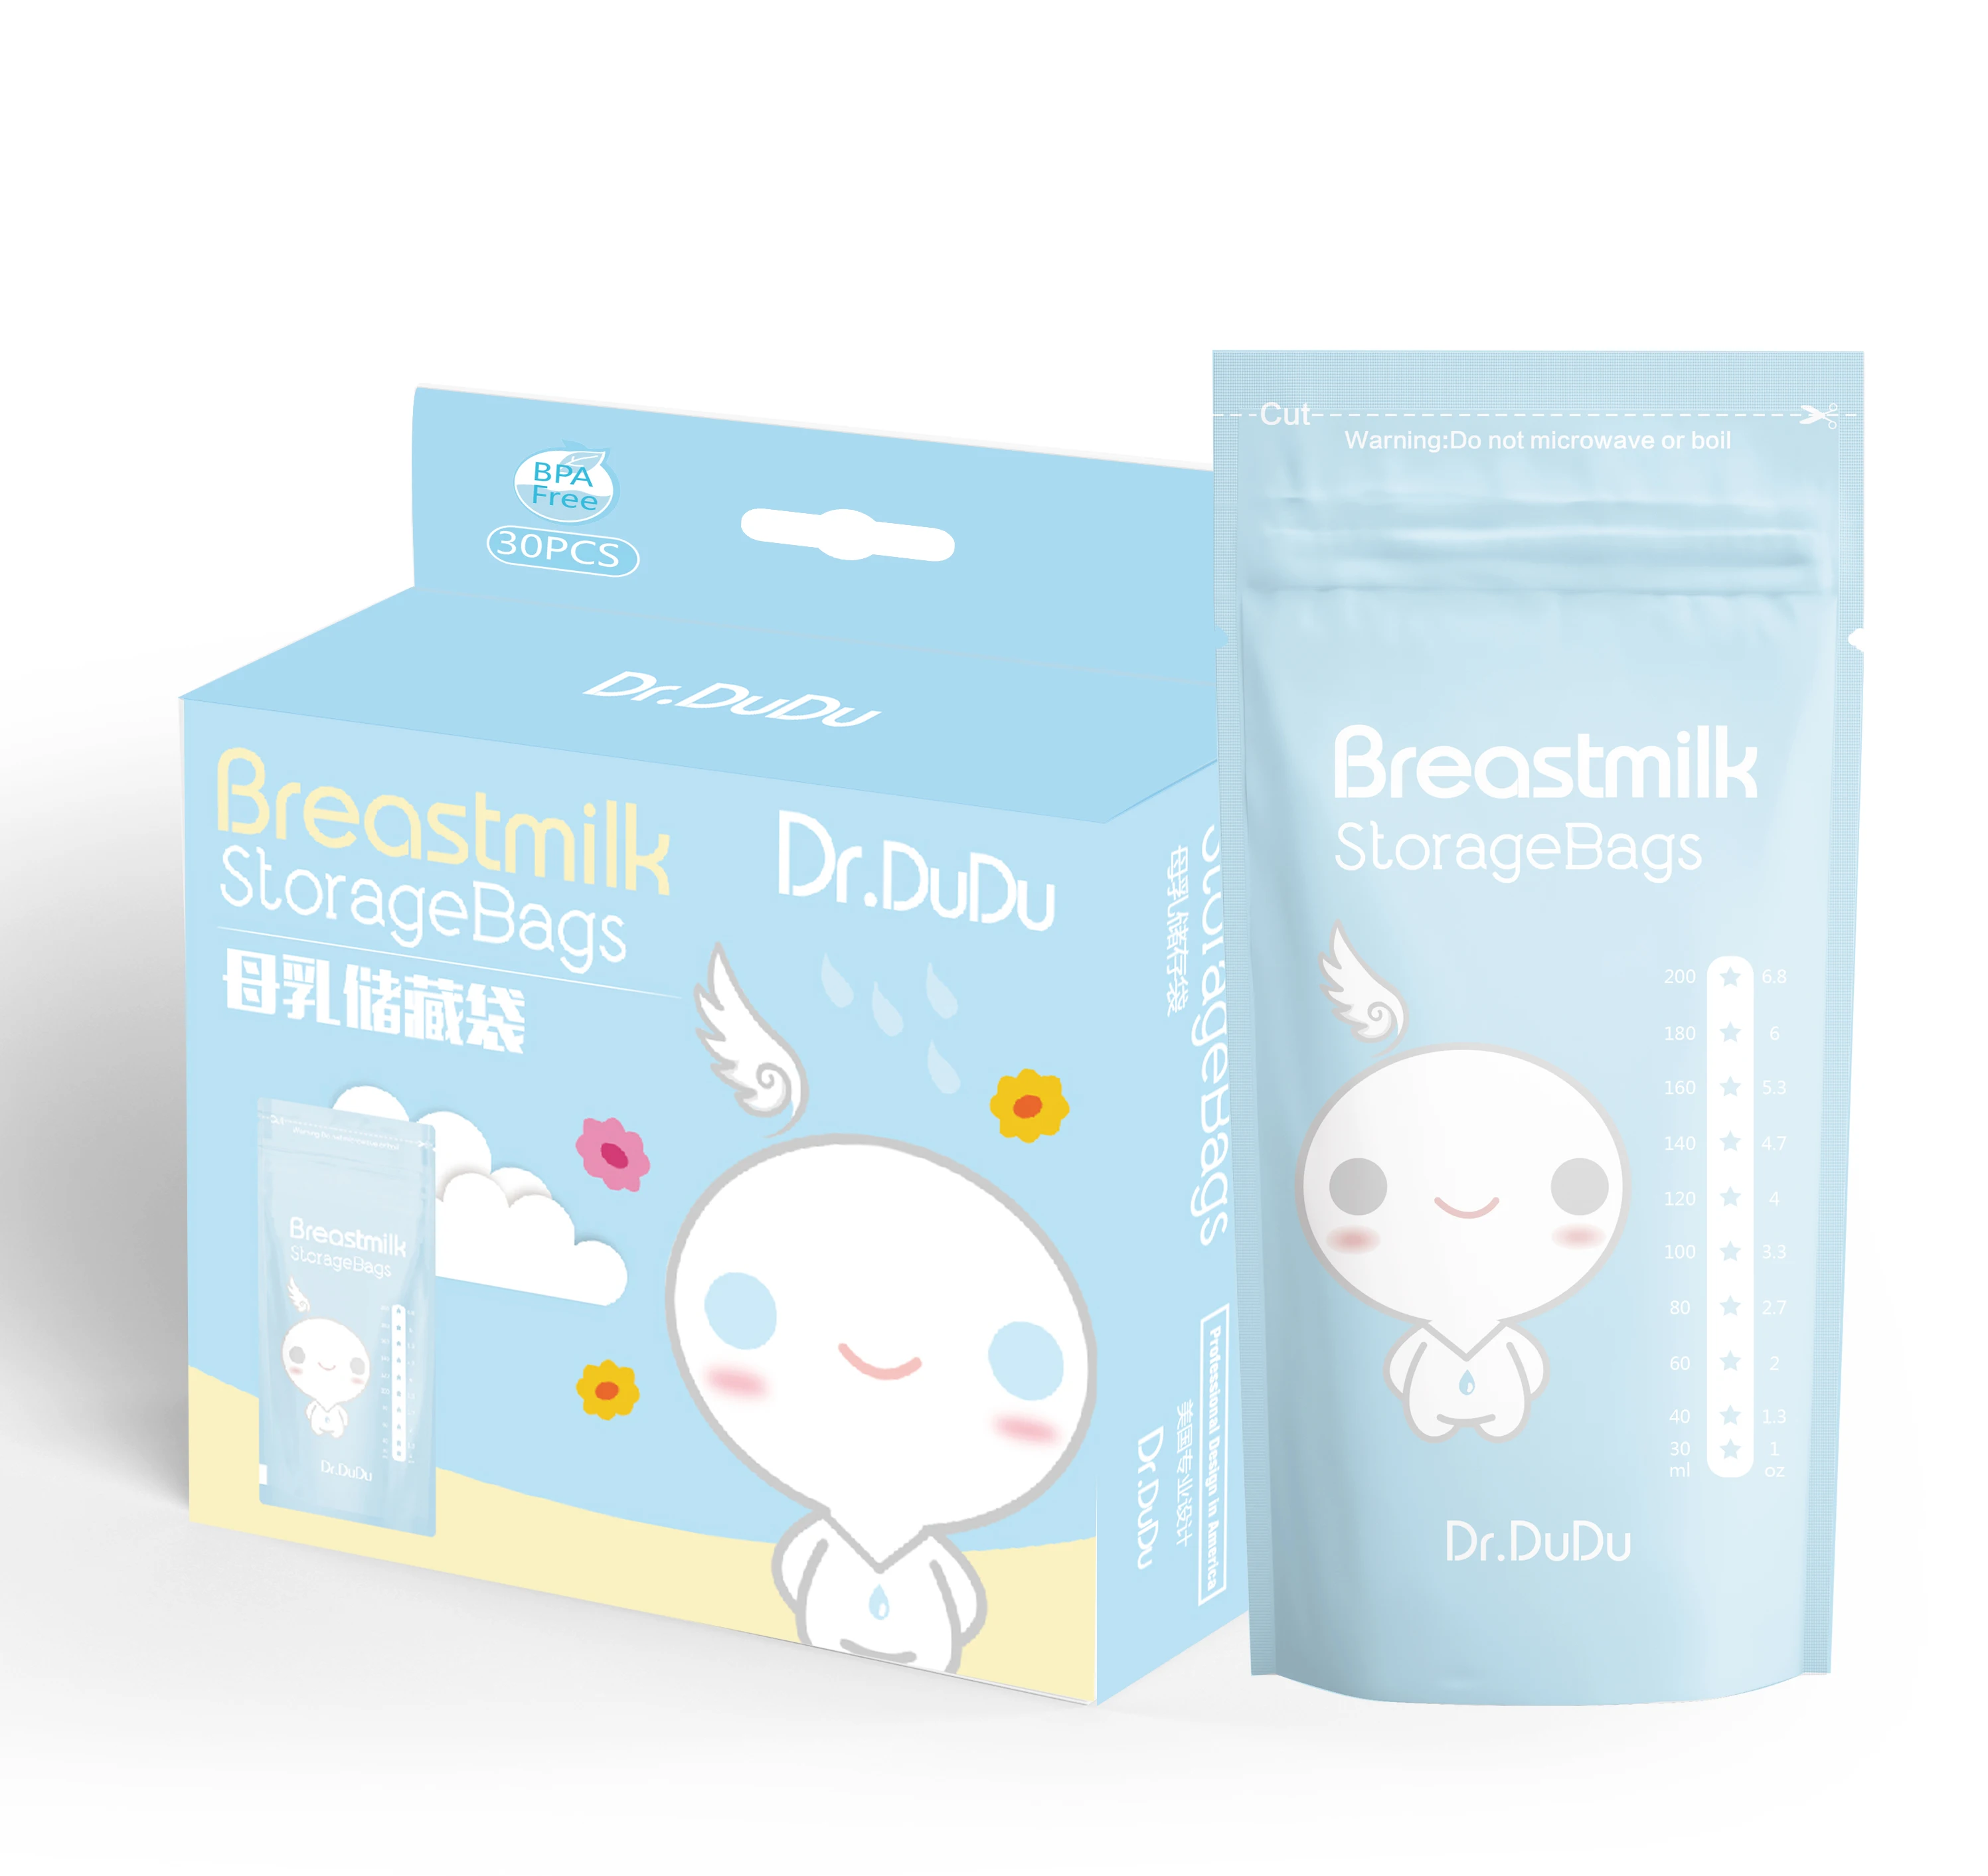 

Dr.DuDu 200ml special offer pre-sterilized BPA free breast milk storage bags, Blue